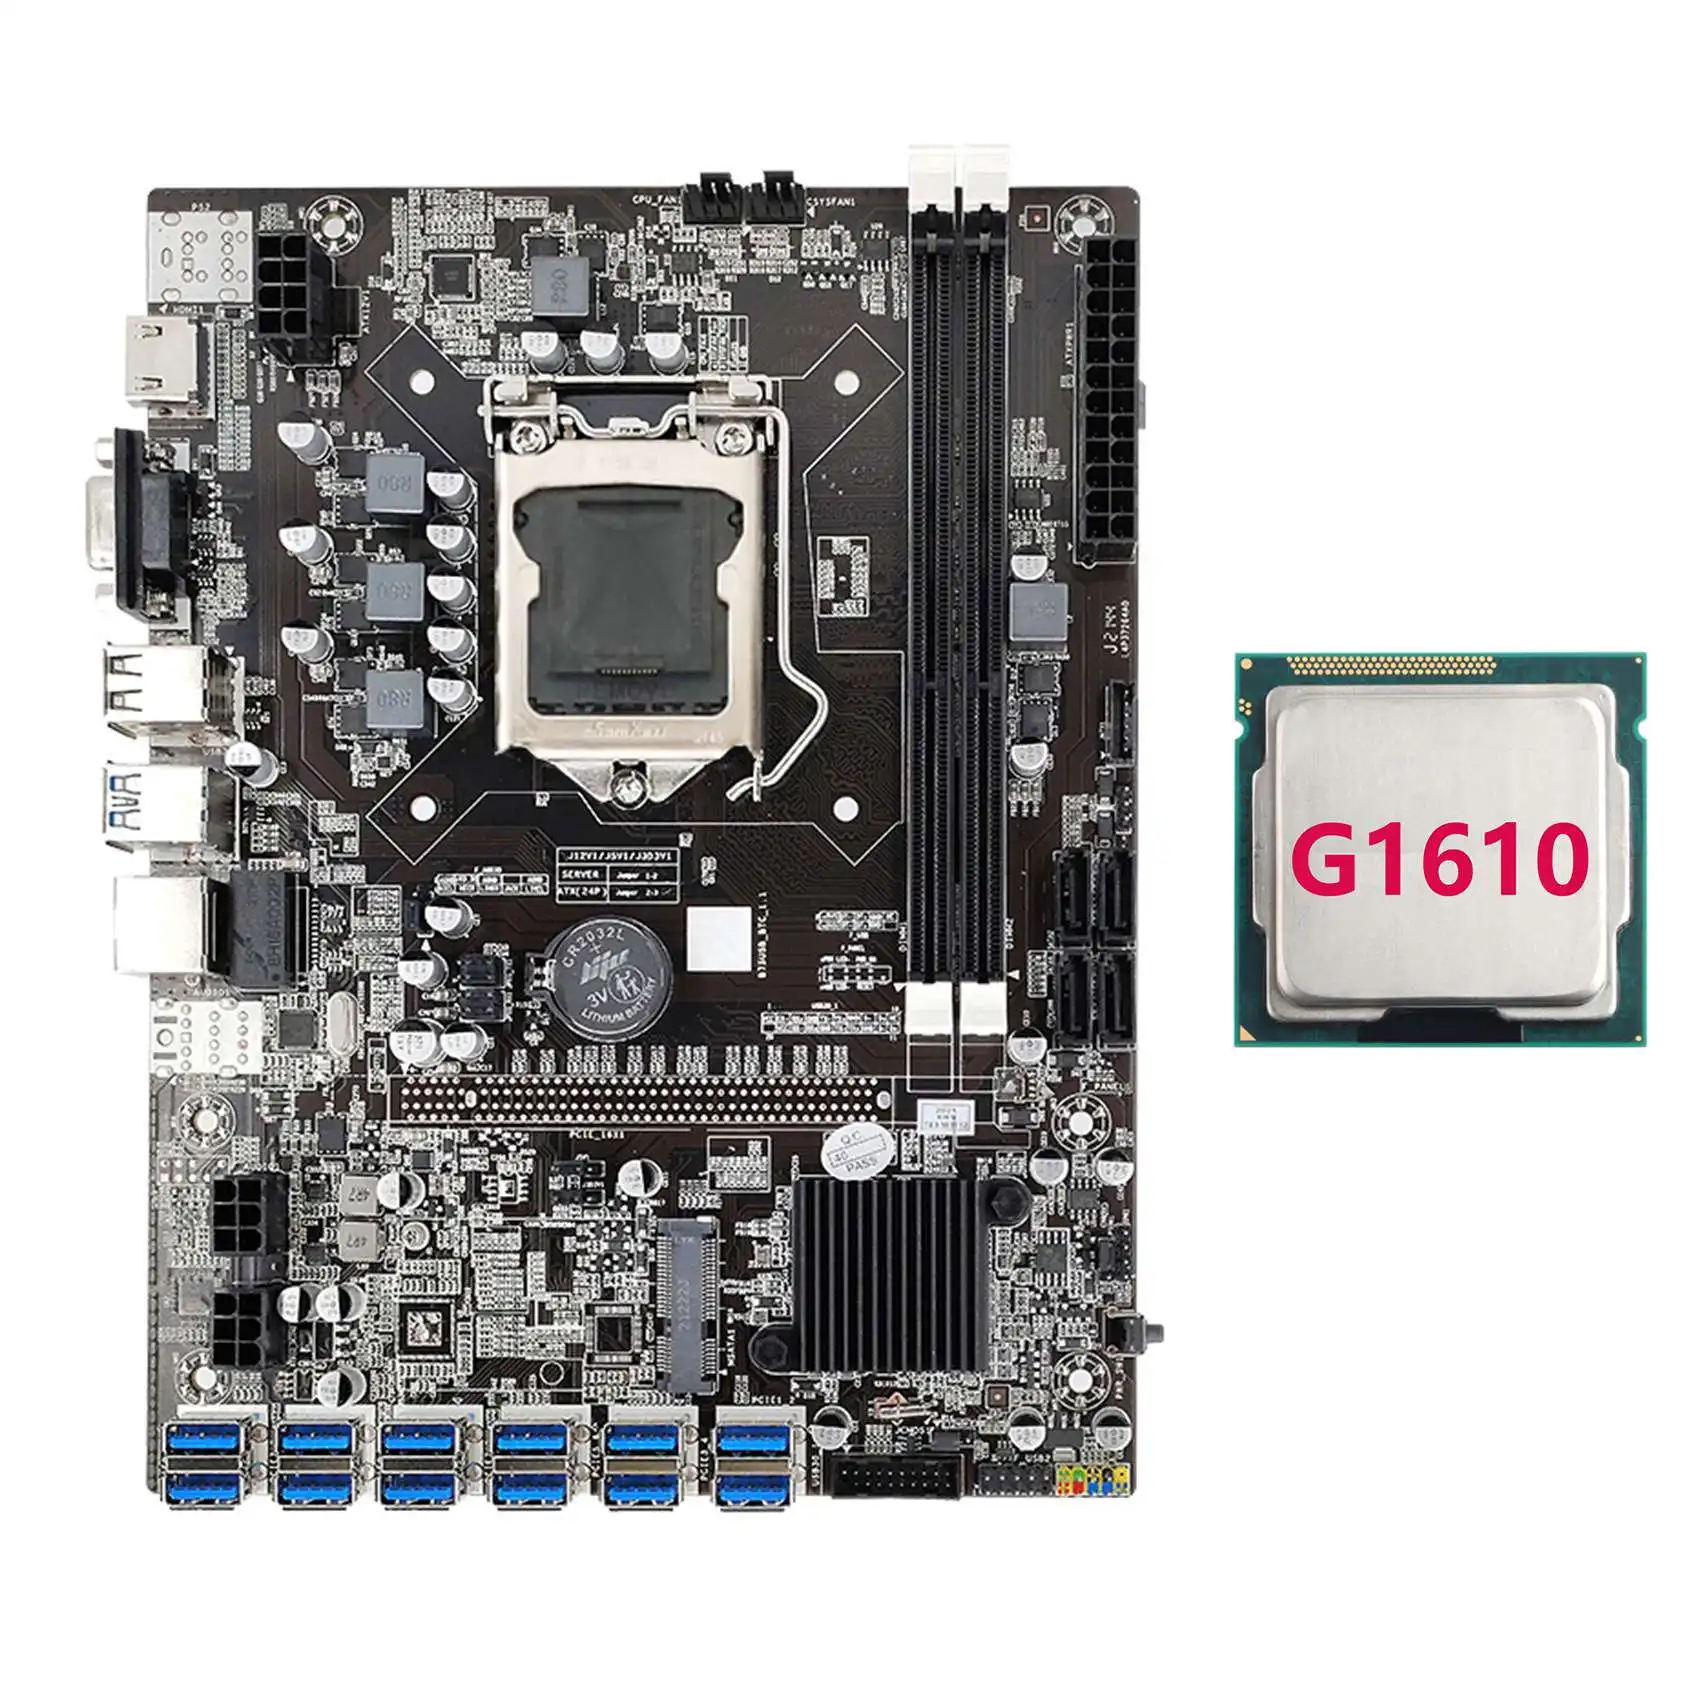 B75 ETH Mining Motherboard 12 PCIE to USB with G1610 CPU LGA1155 MSATA Support 2XDDR3 B75 USB BTC Miner Motherboard